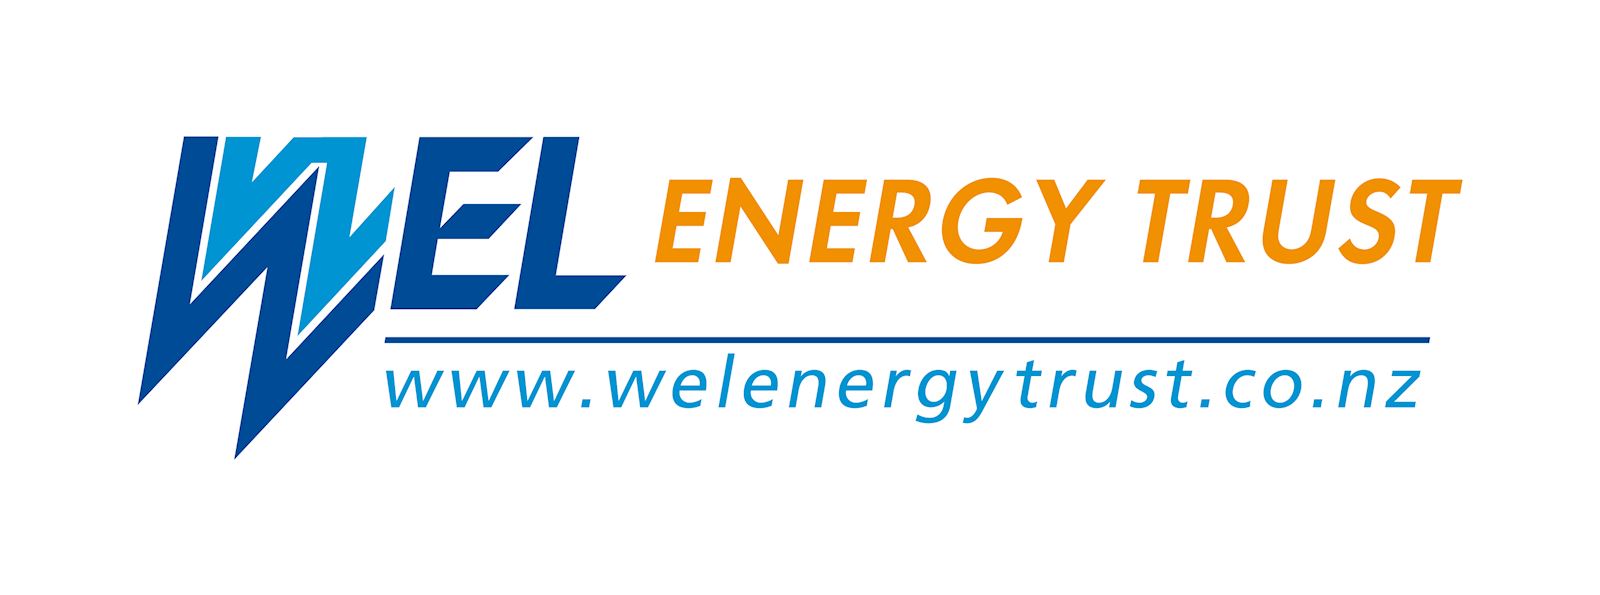 Wel Energy Trust